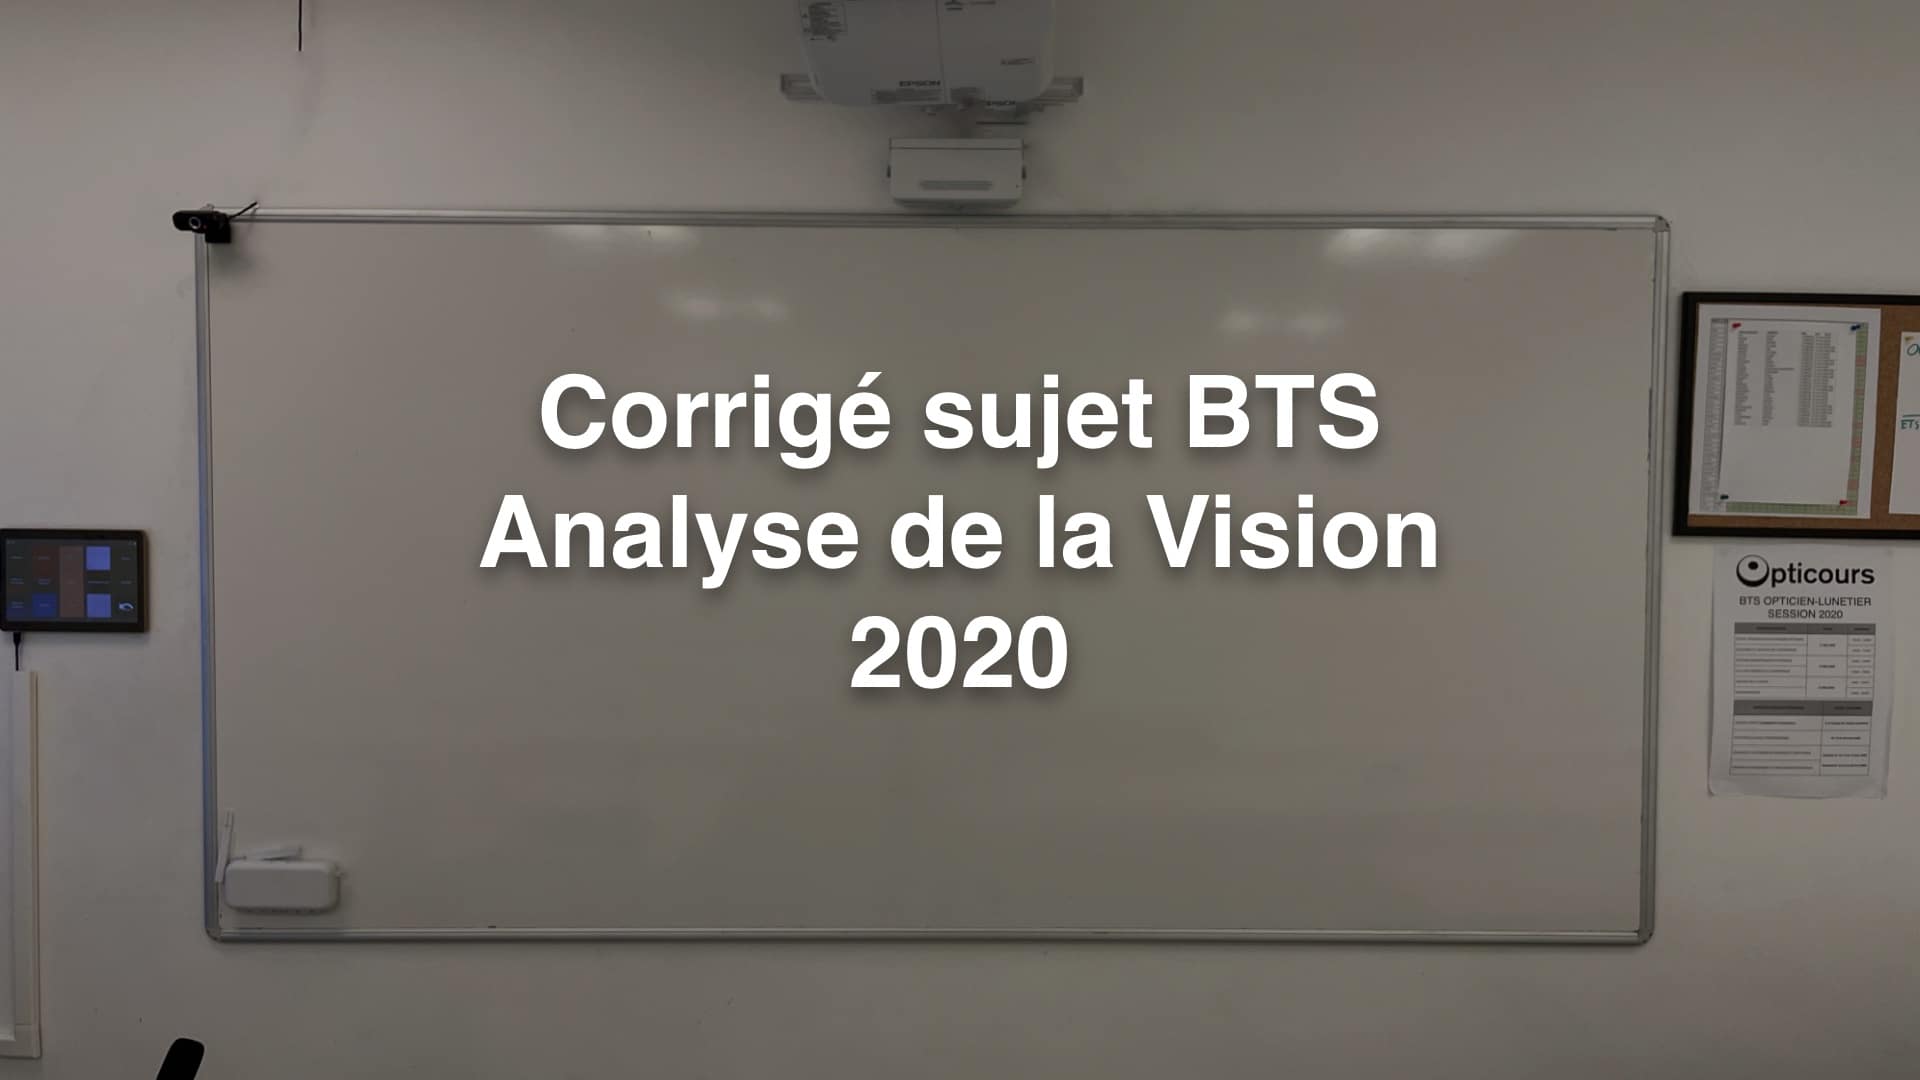 Corrigé sujet BTS Analyse Vision 2020